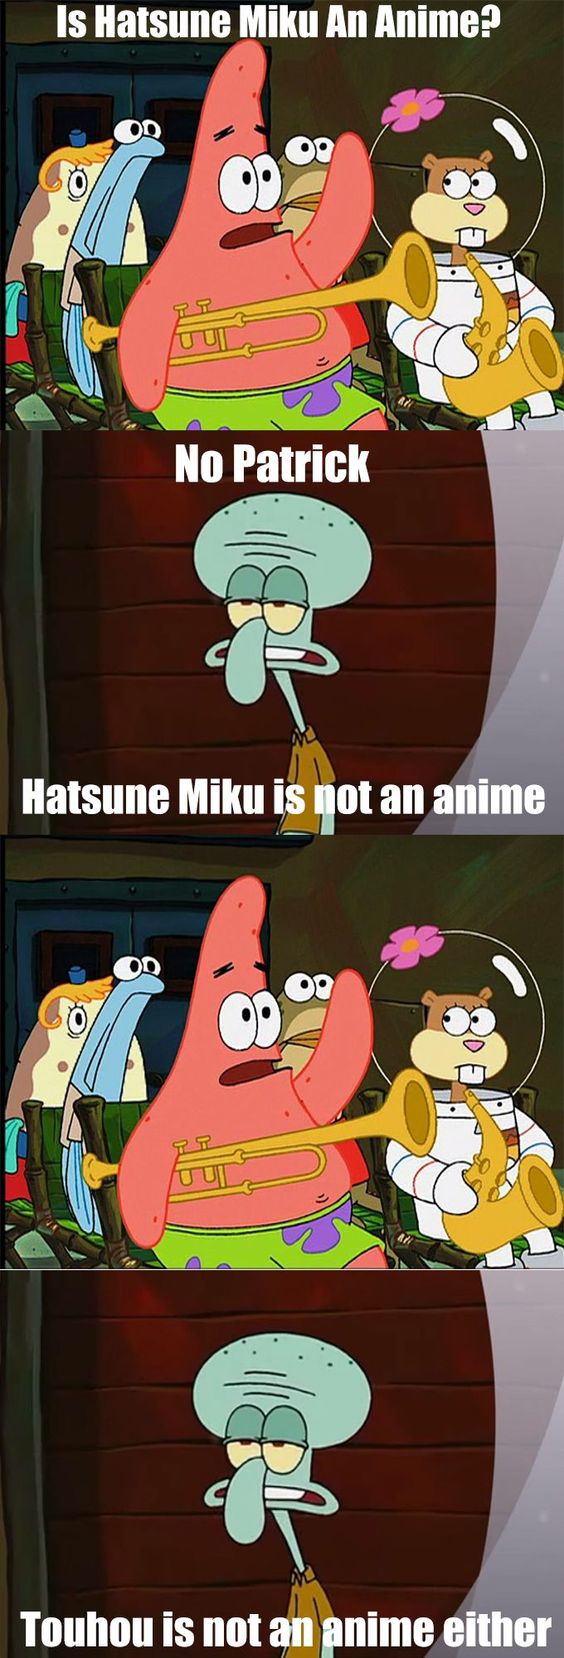 GoBoiano - 11 Unfortunate People That Believe Hatsune Miku Is Anime